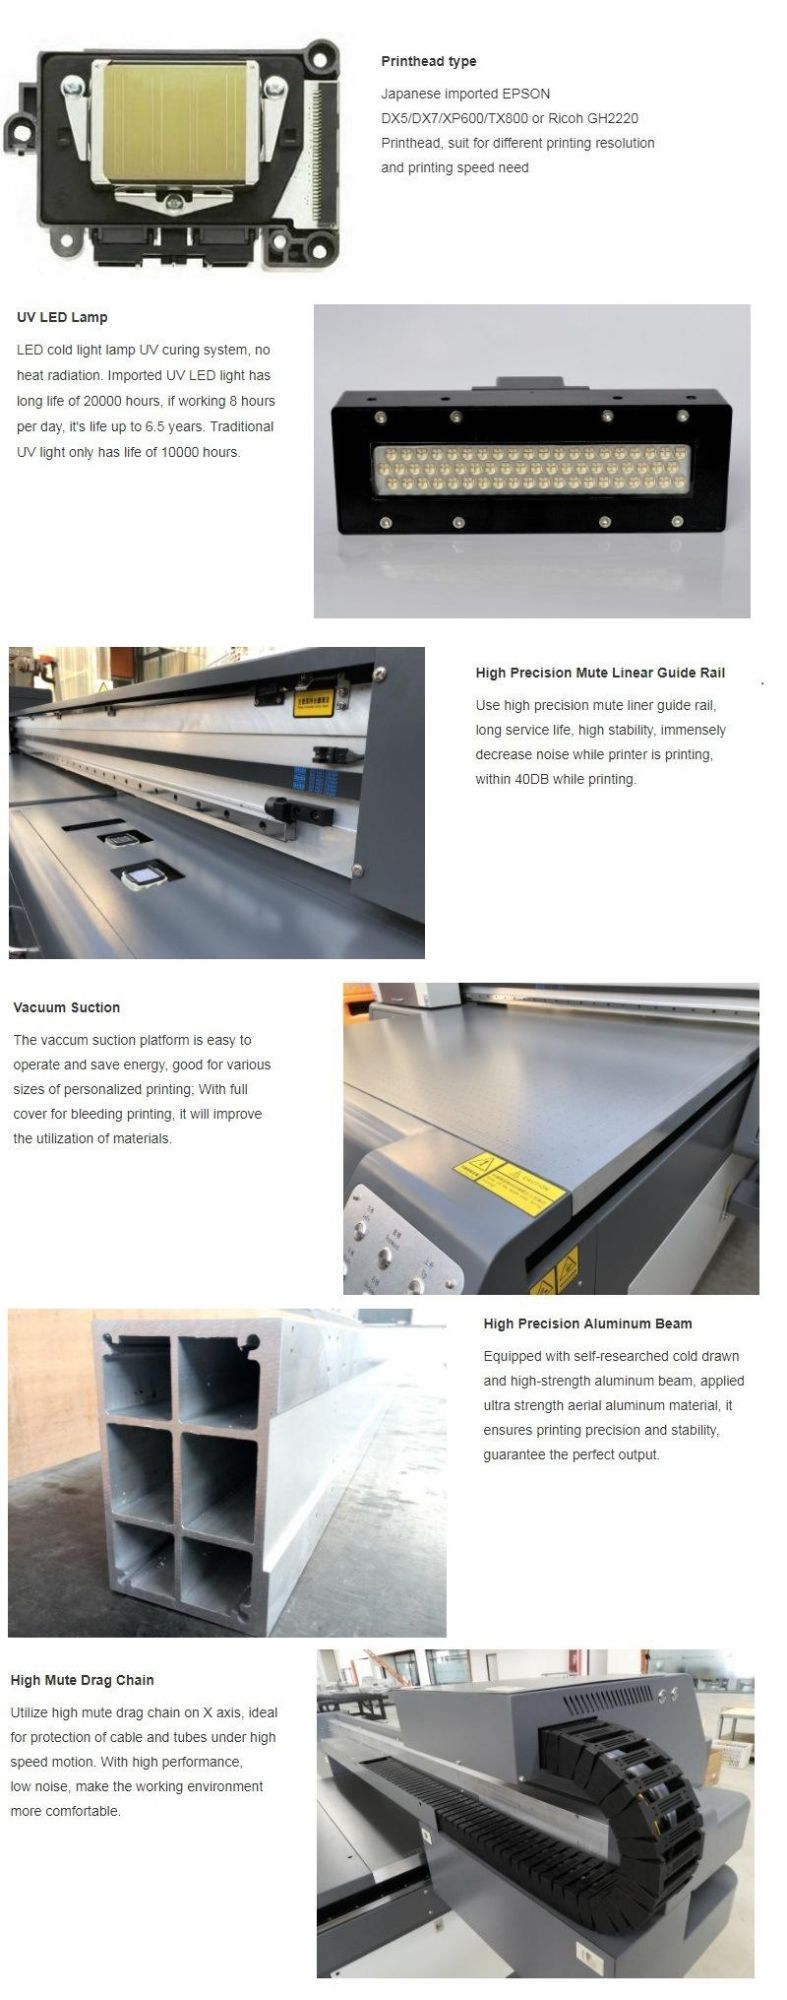 Ntek Flatbed UV Inkjet Photo Album Printing Machine